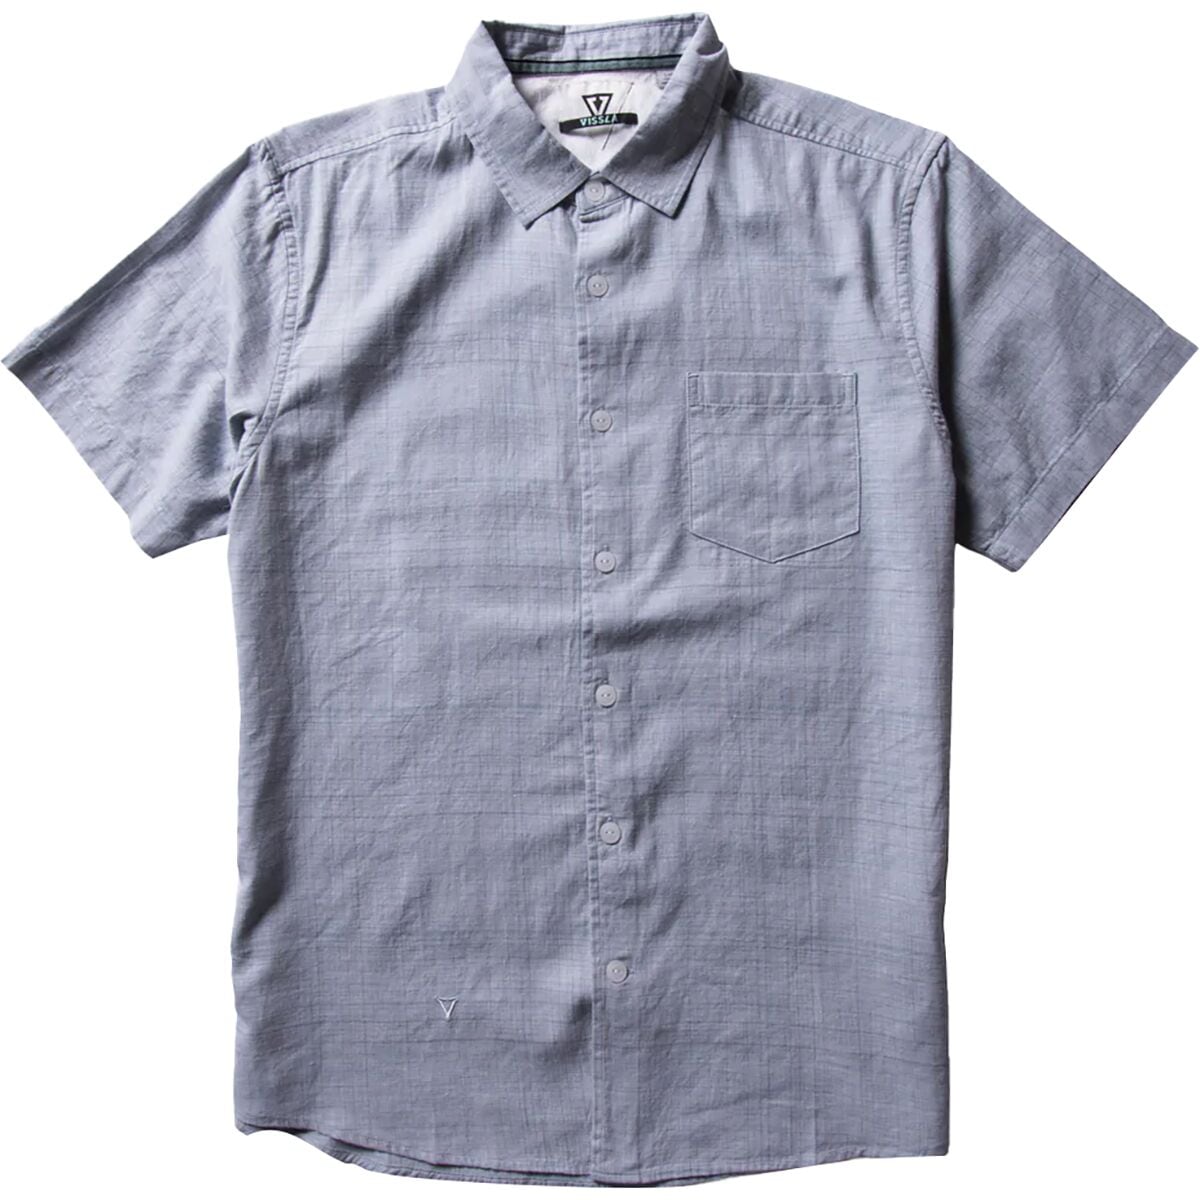 Mill Eco Short-Sleeve Shirt - Men